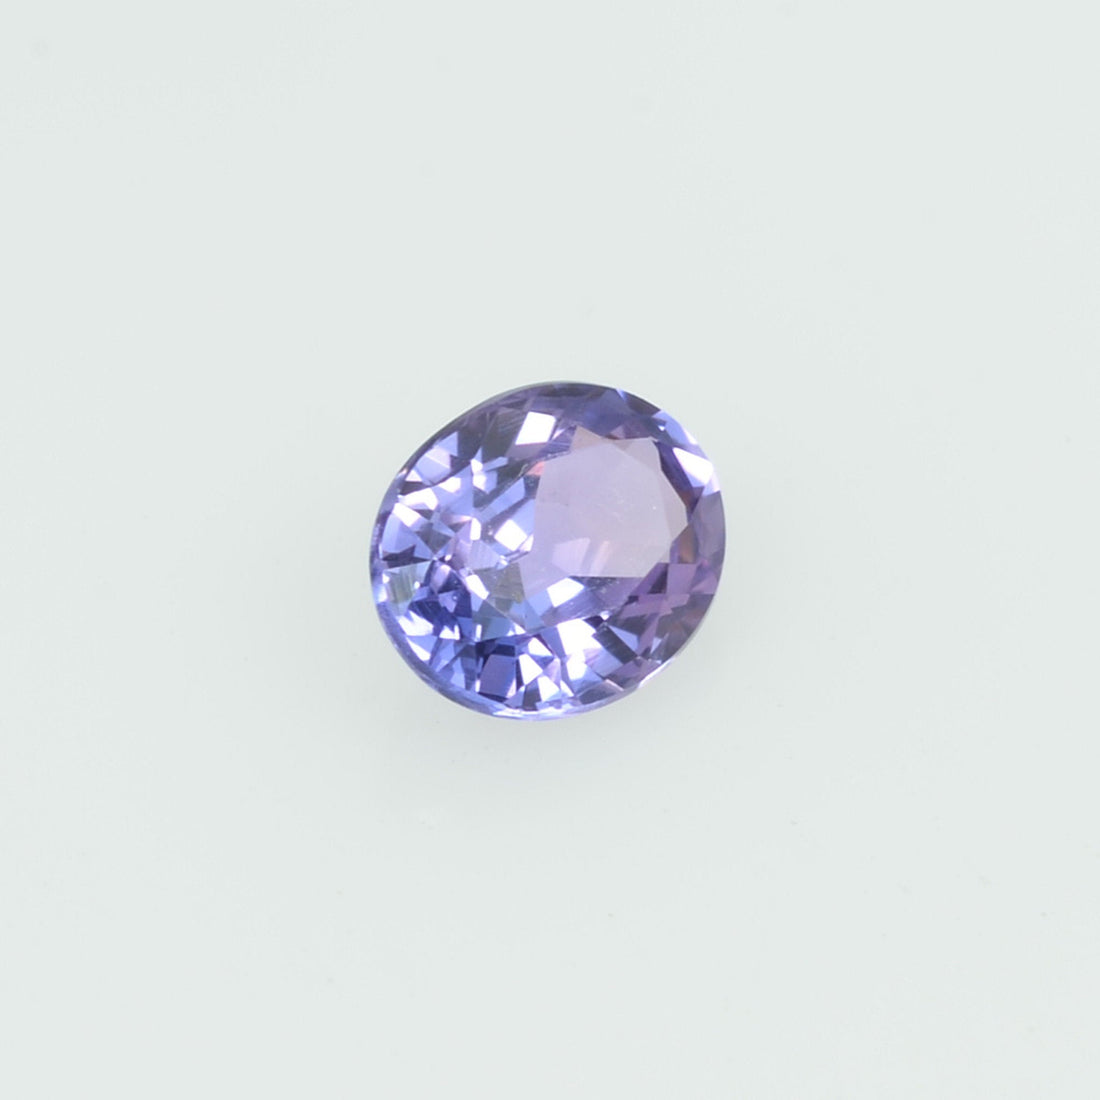 0.21 Cts Natural Lavender Sapphire Loose Gemstone Oval Cut - Thai Gems Export Ltd.